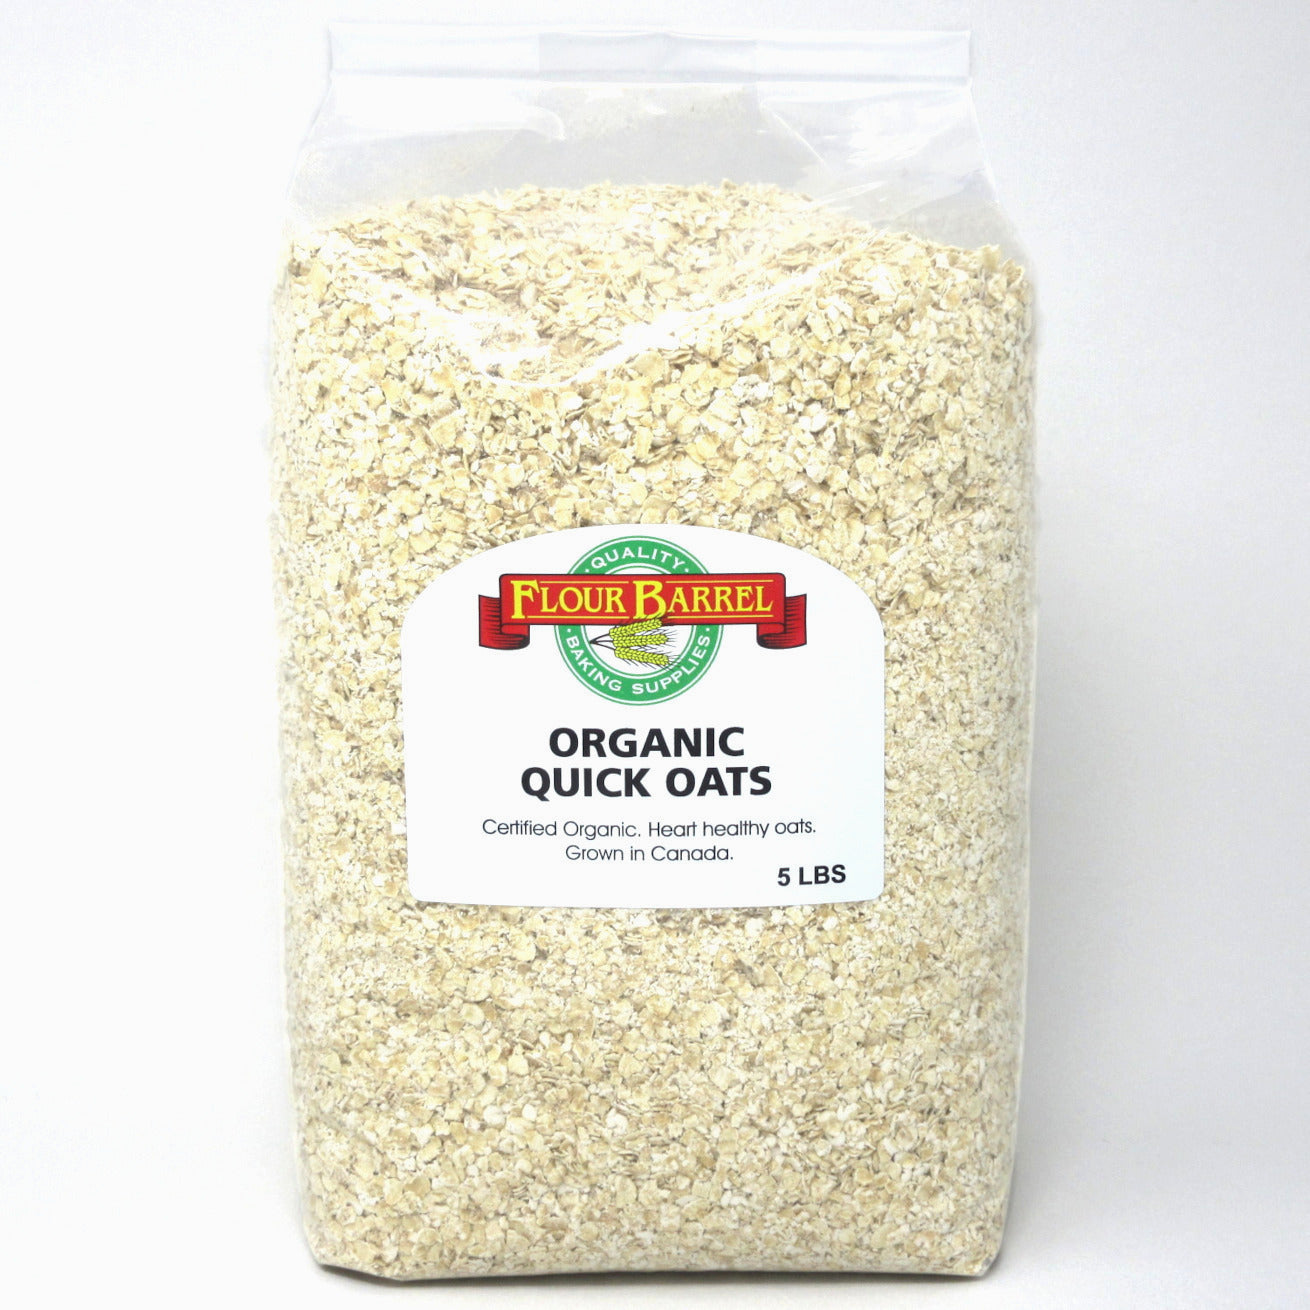 Flour Barrel product image - Organic Quick Oats